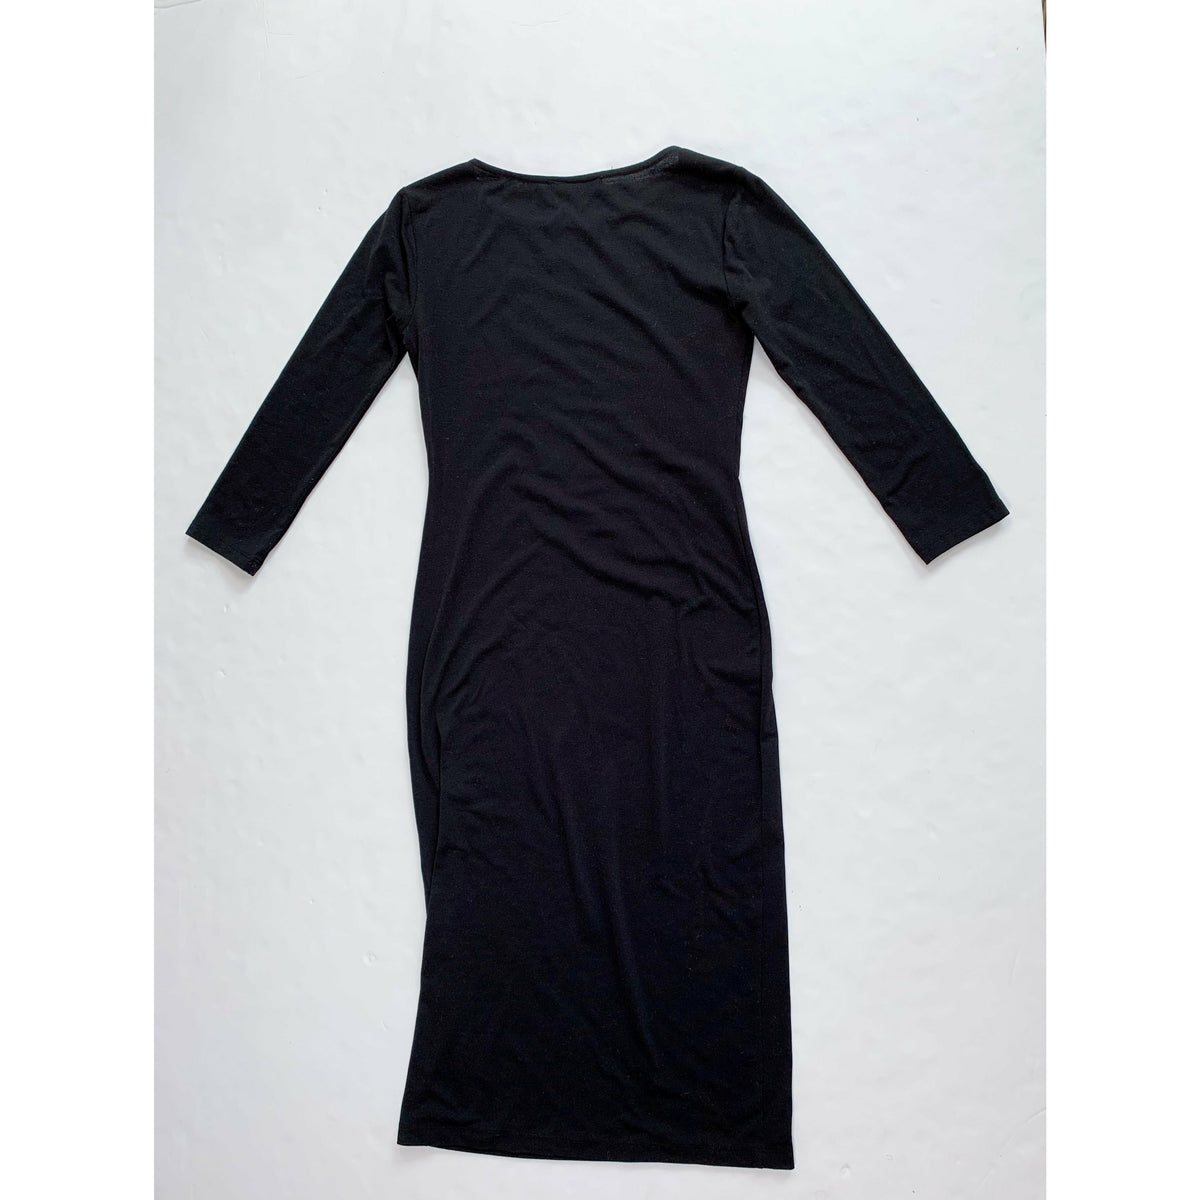 Fury - Black Half Sleeve Maxi Dress